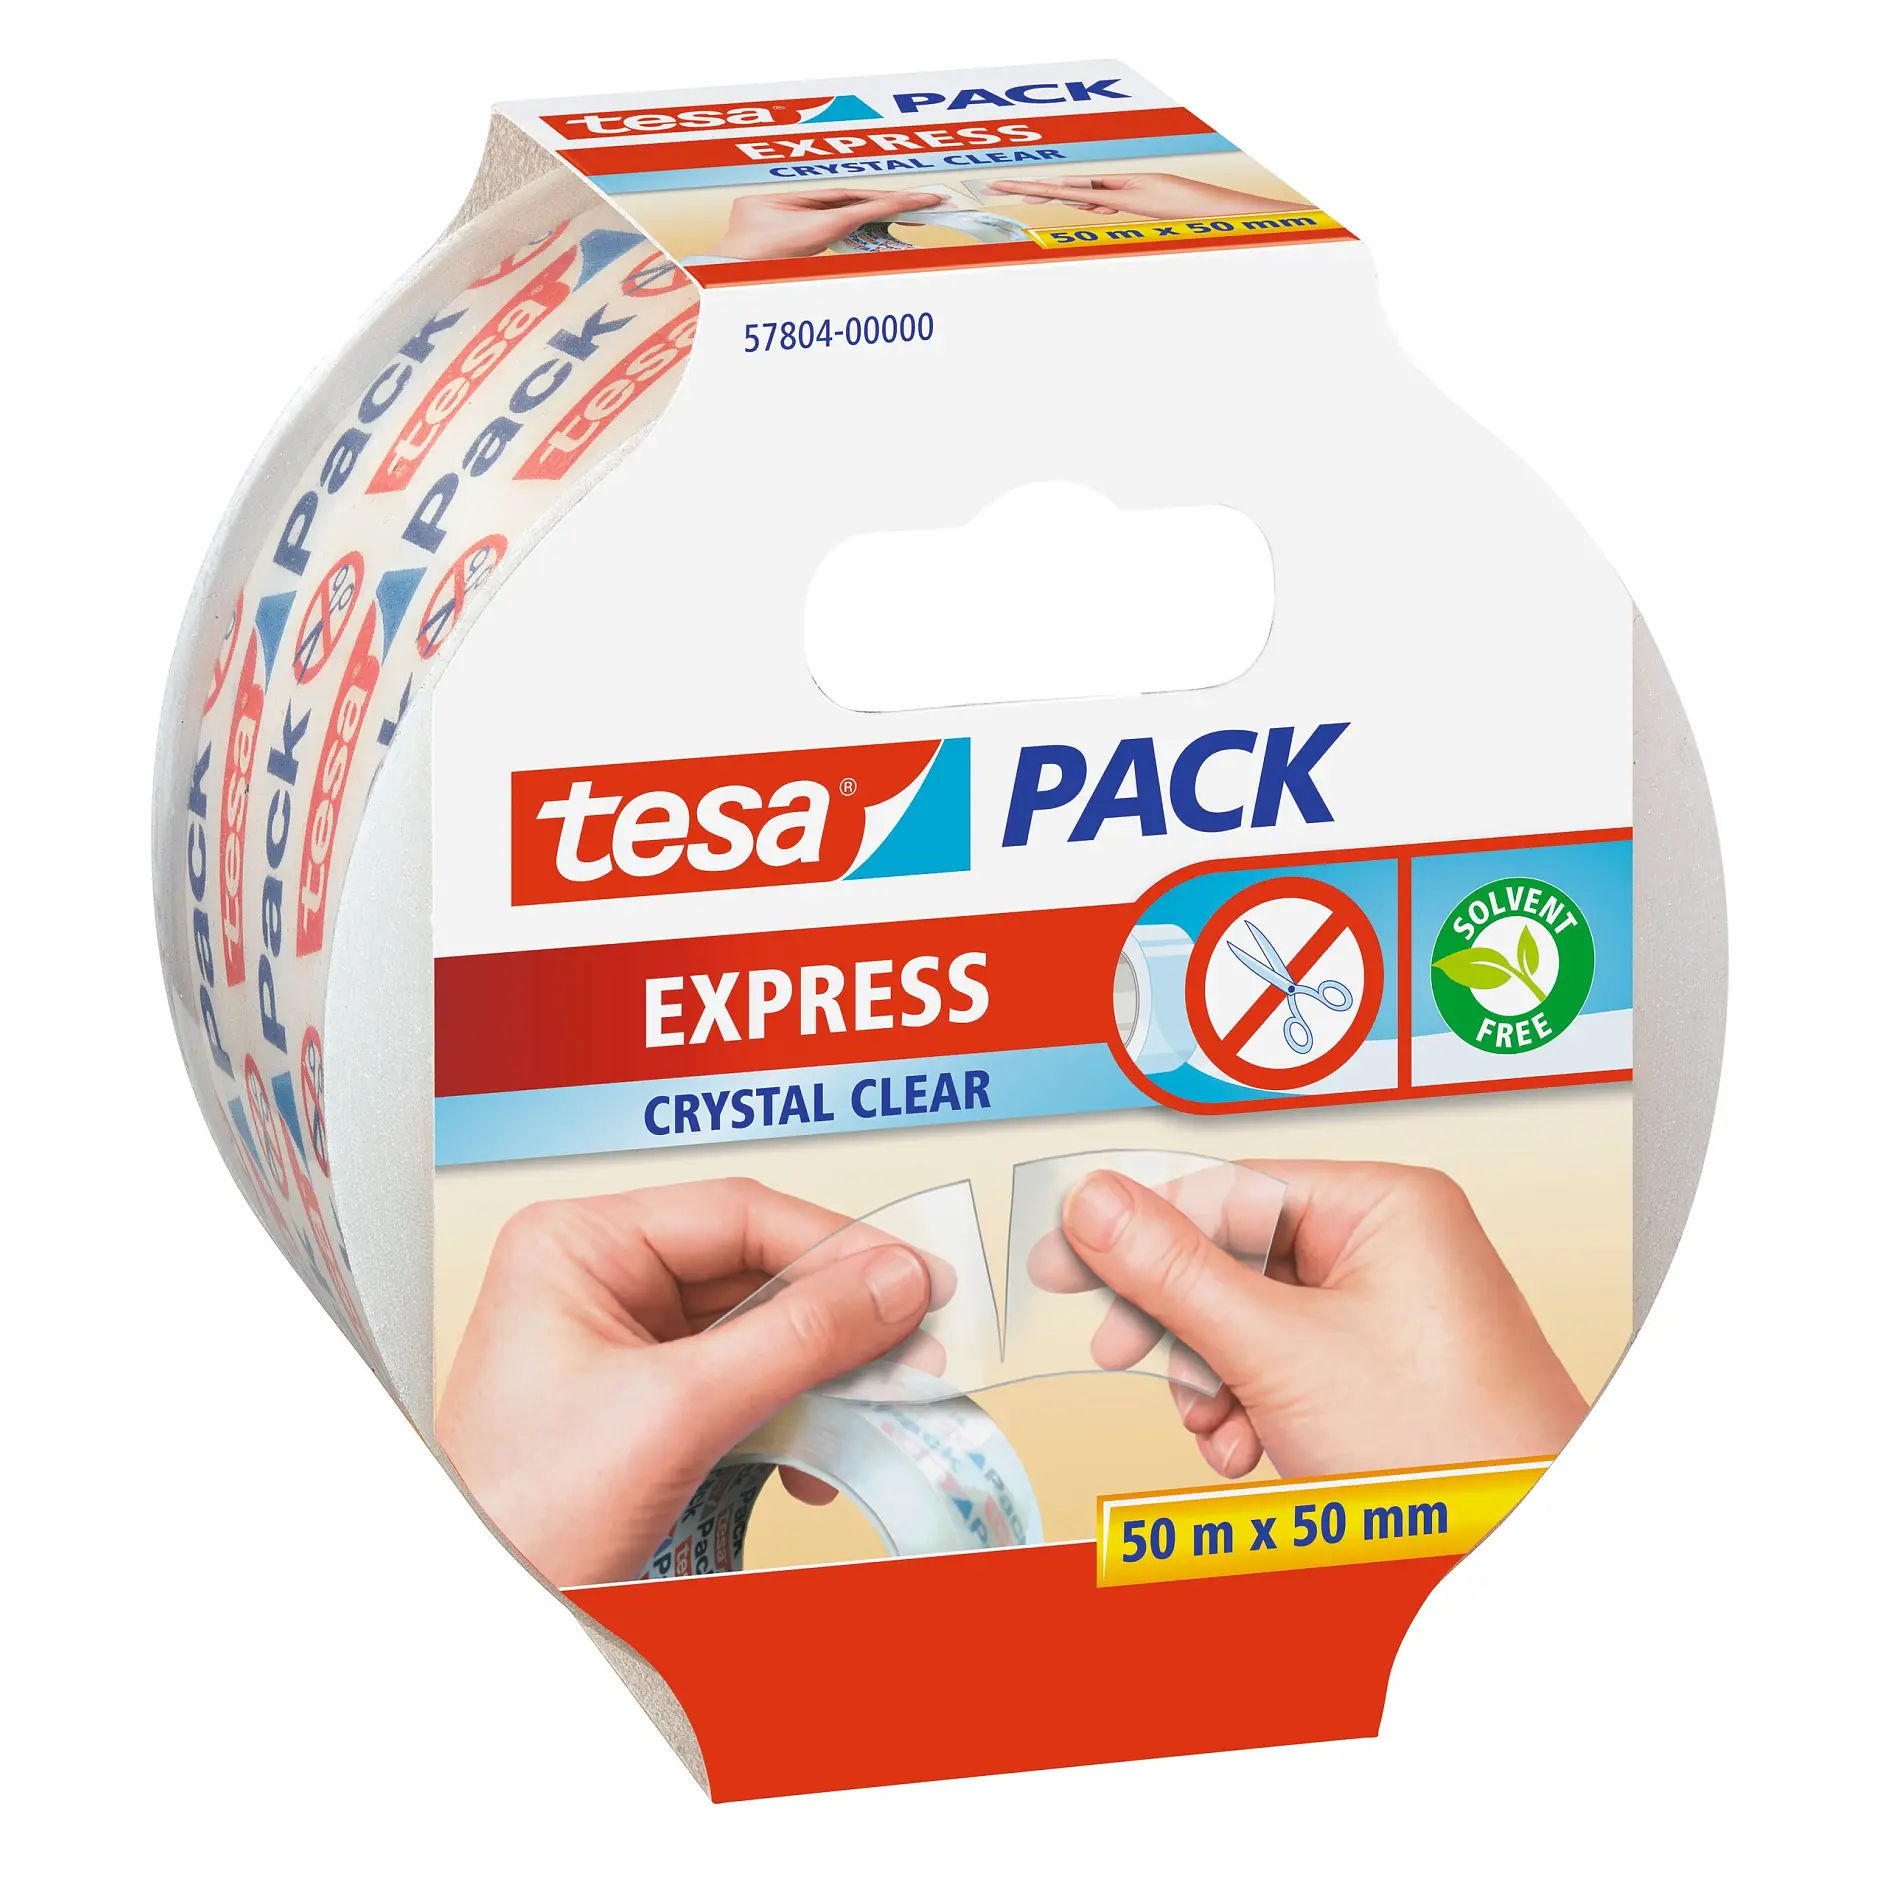 [en-en] tesapack express 50m x 50mm, crystal clear